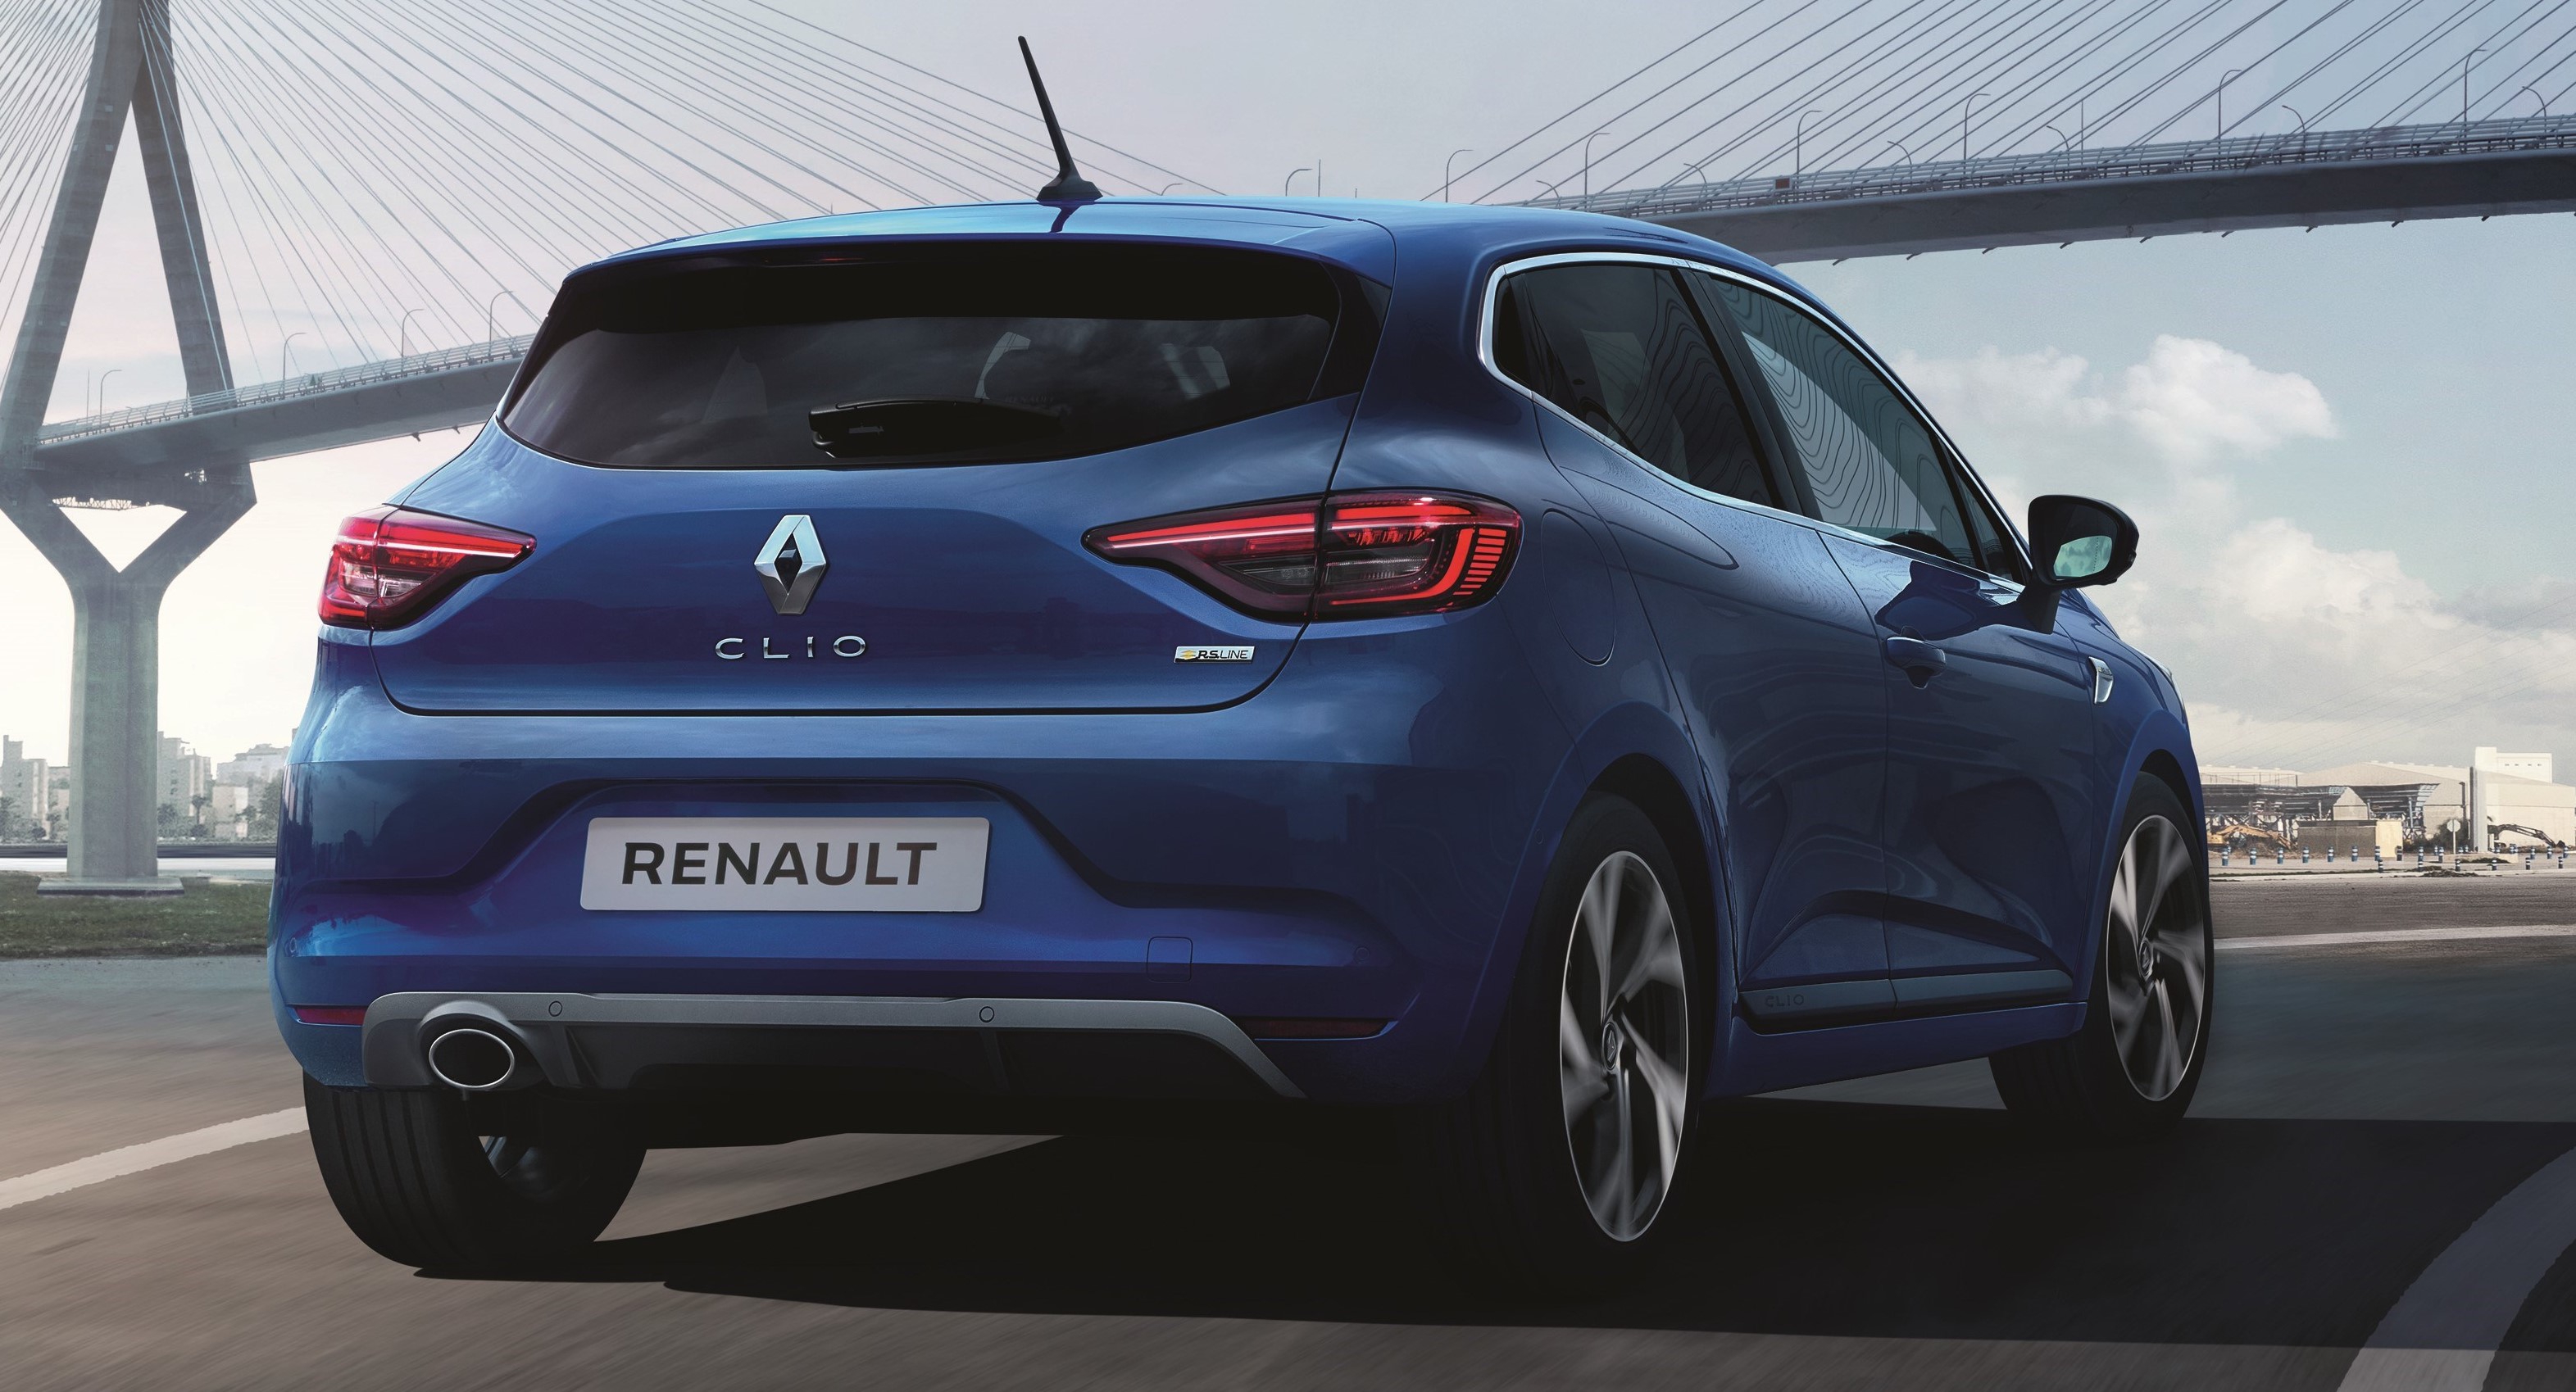 Oto nowa generacja Renault Clio!